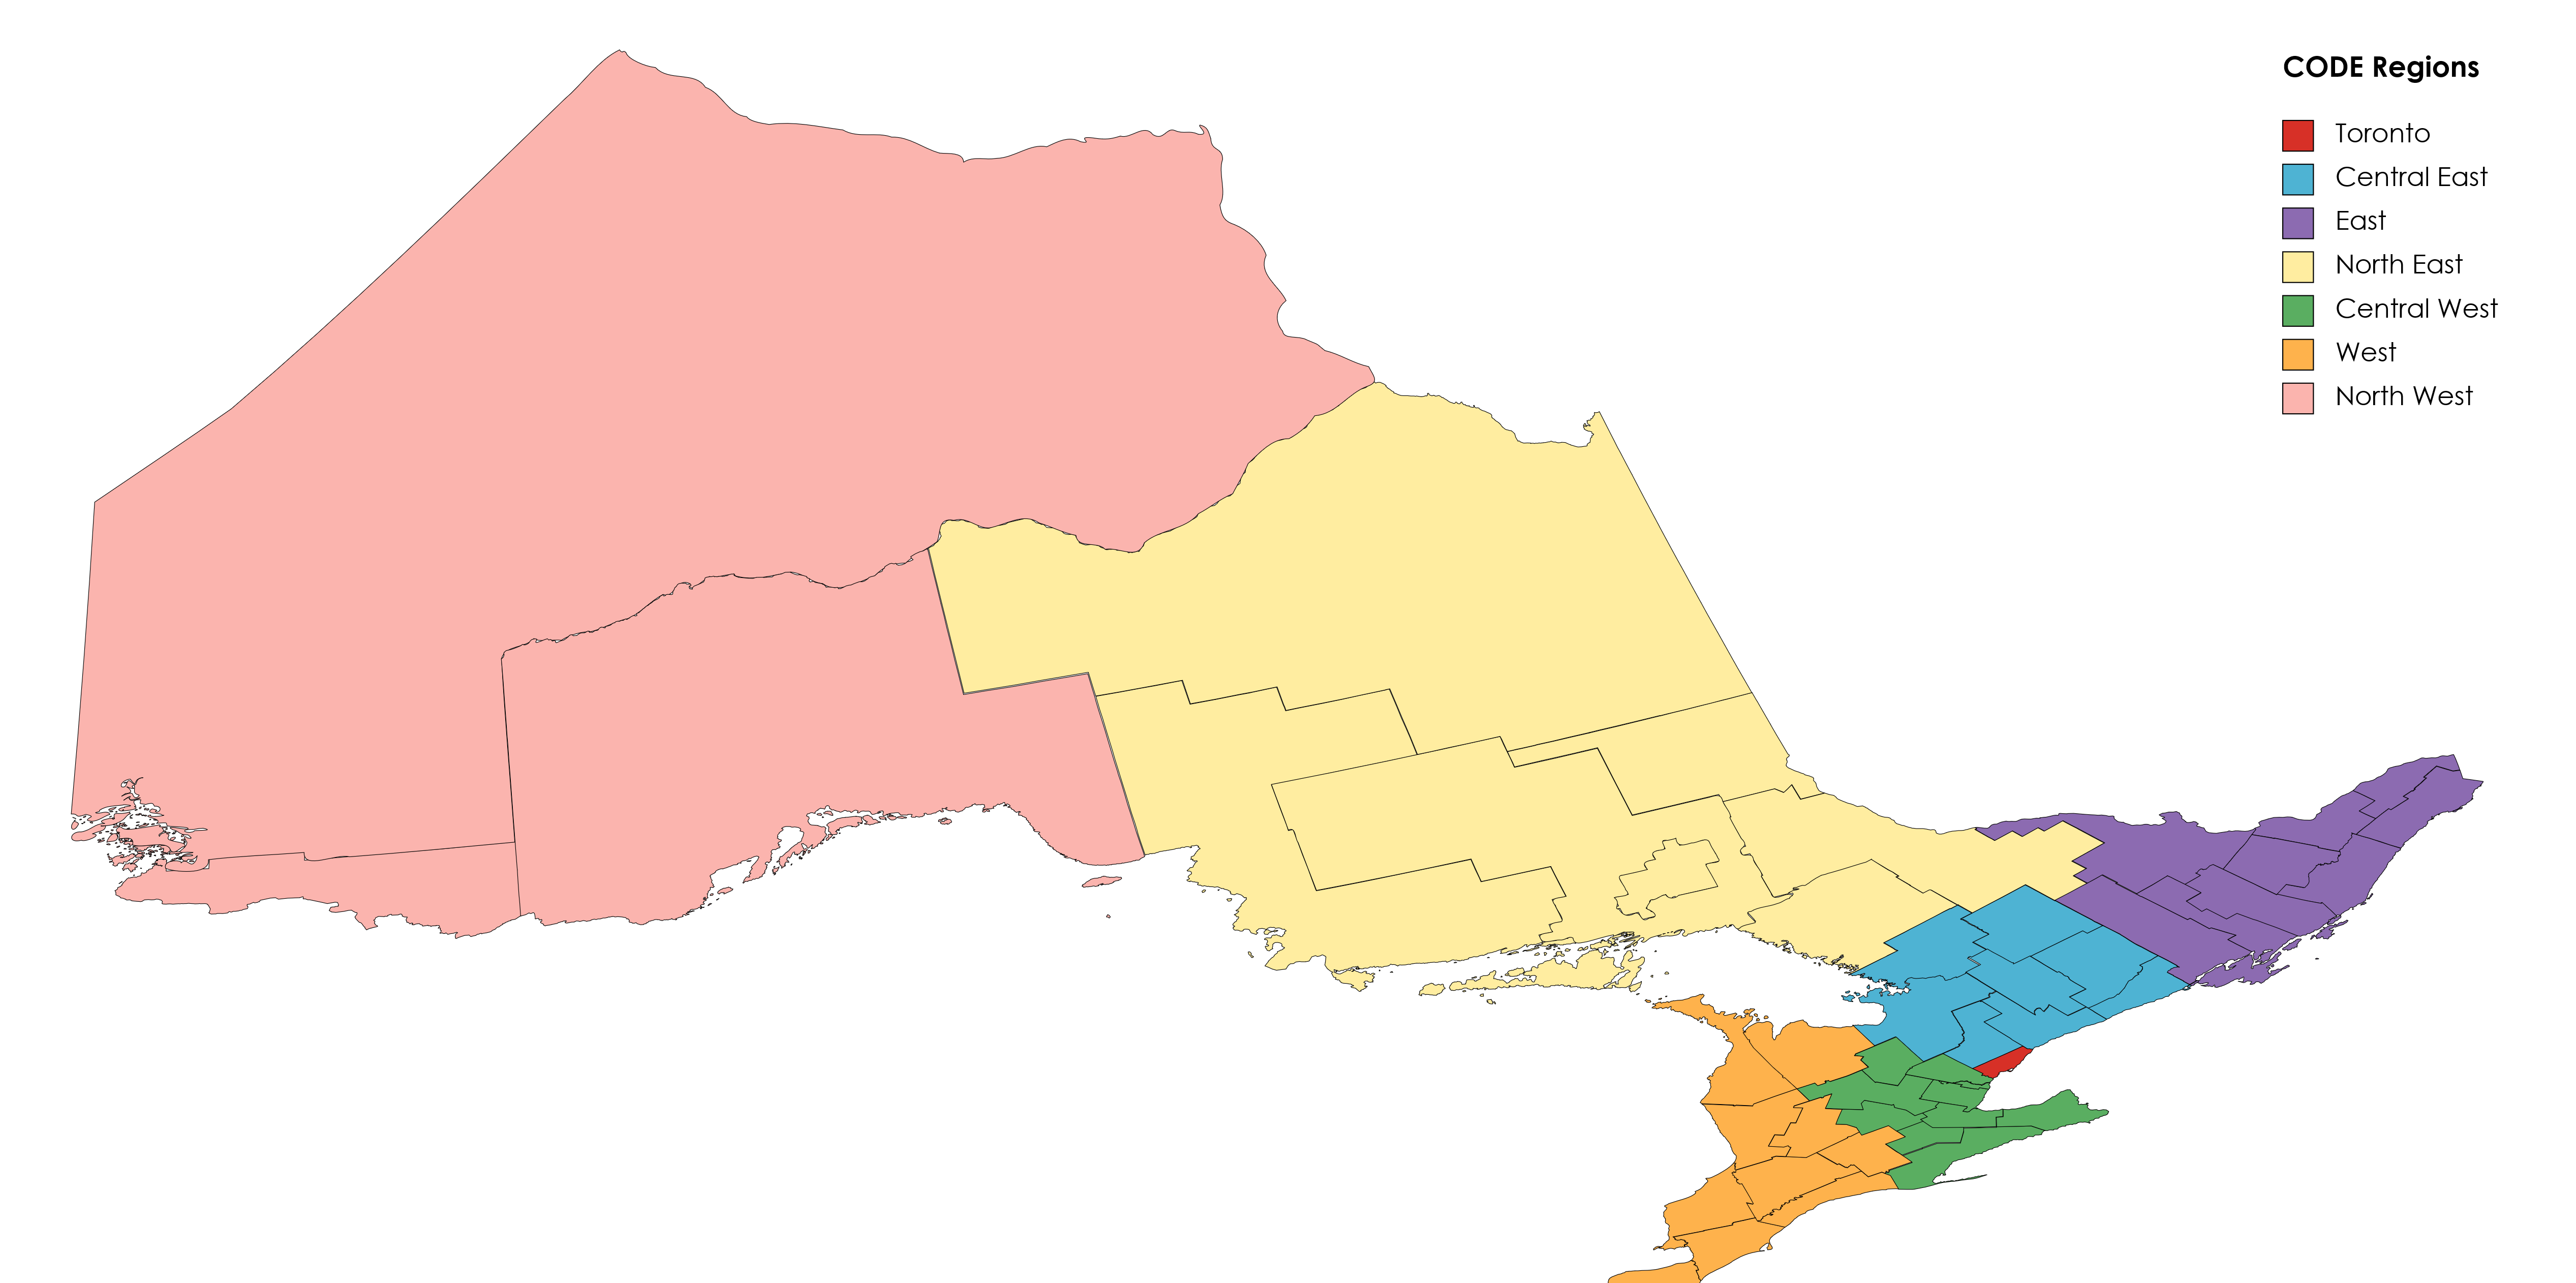 Map of CODE Regions